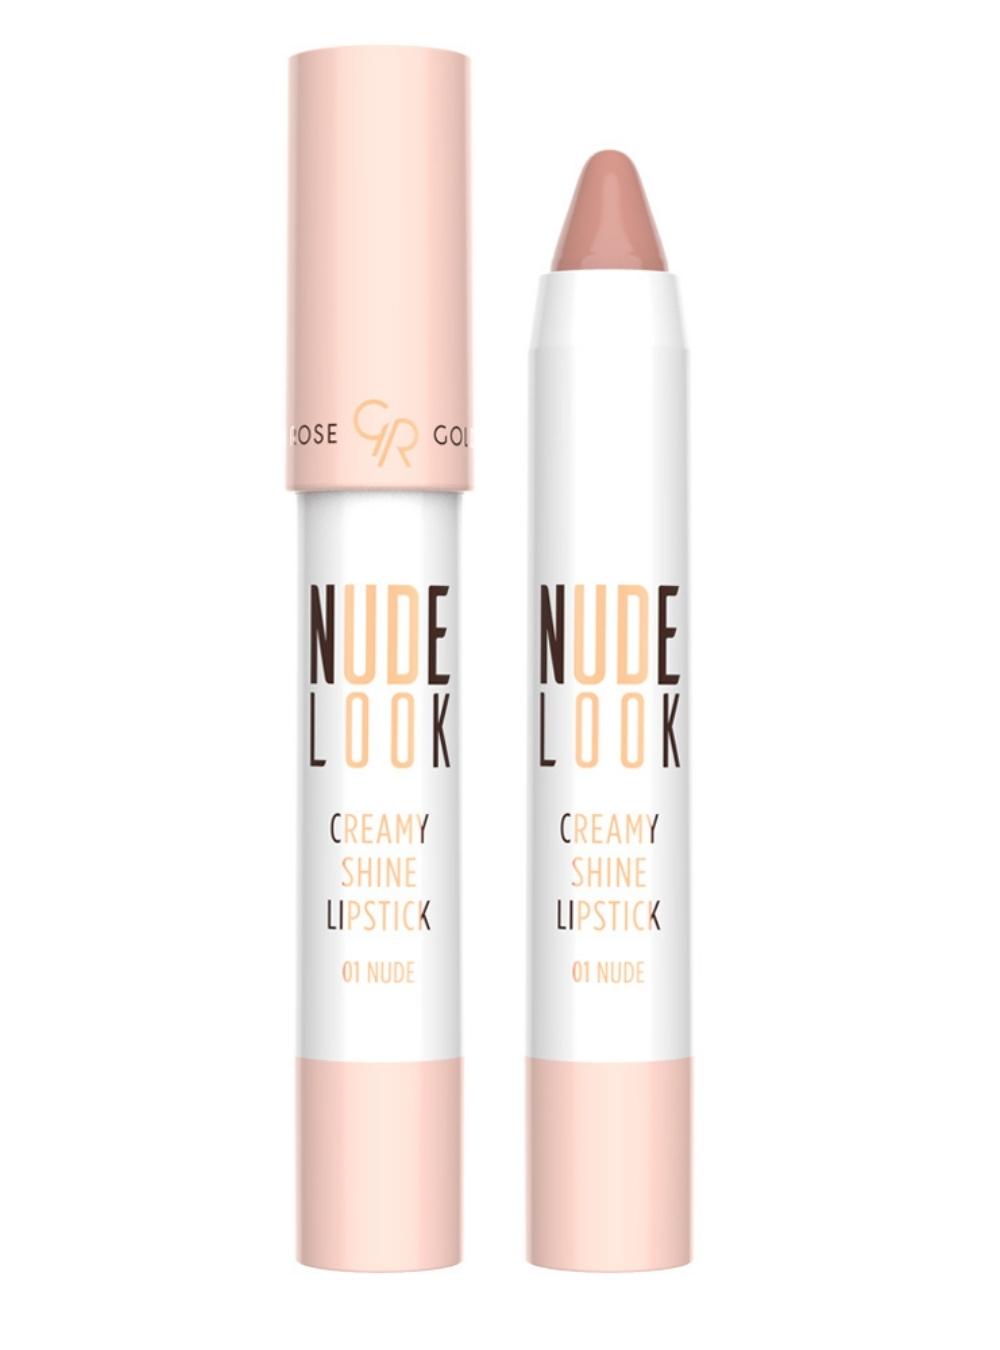 NL Creamy Shine Lipstick